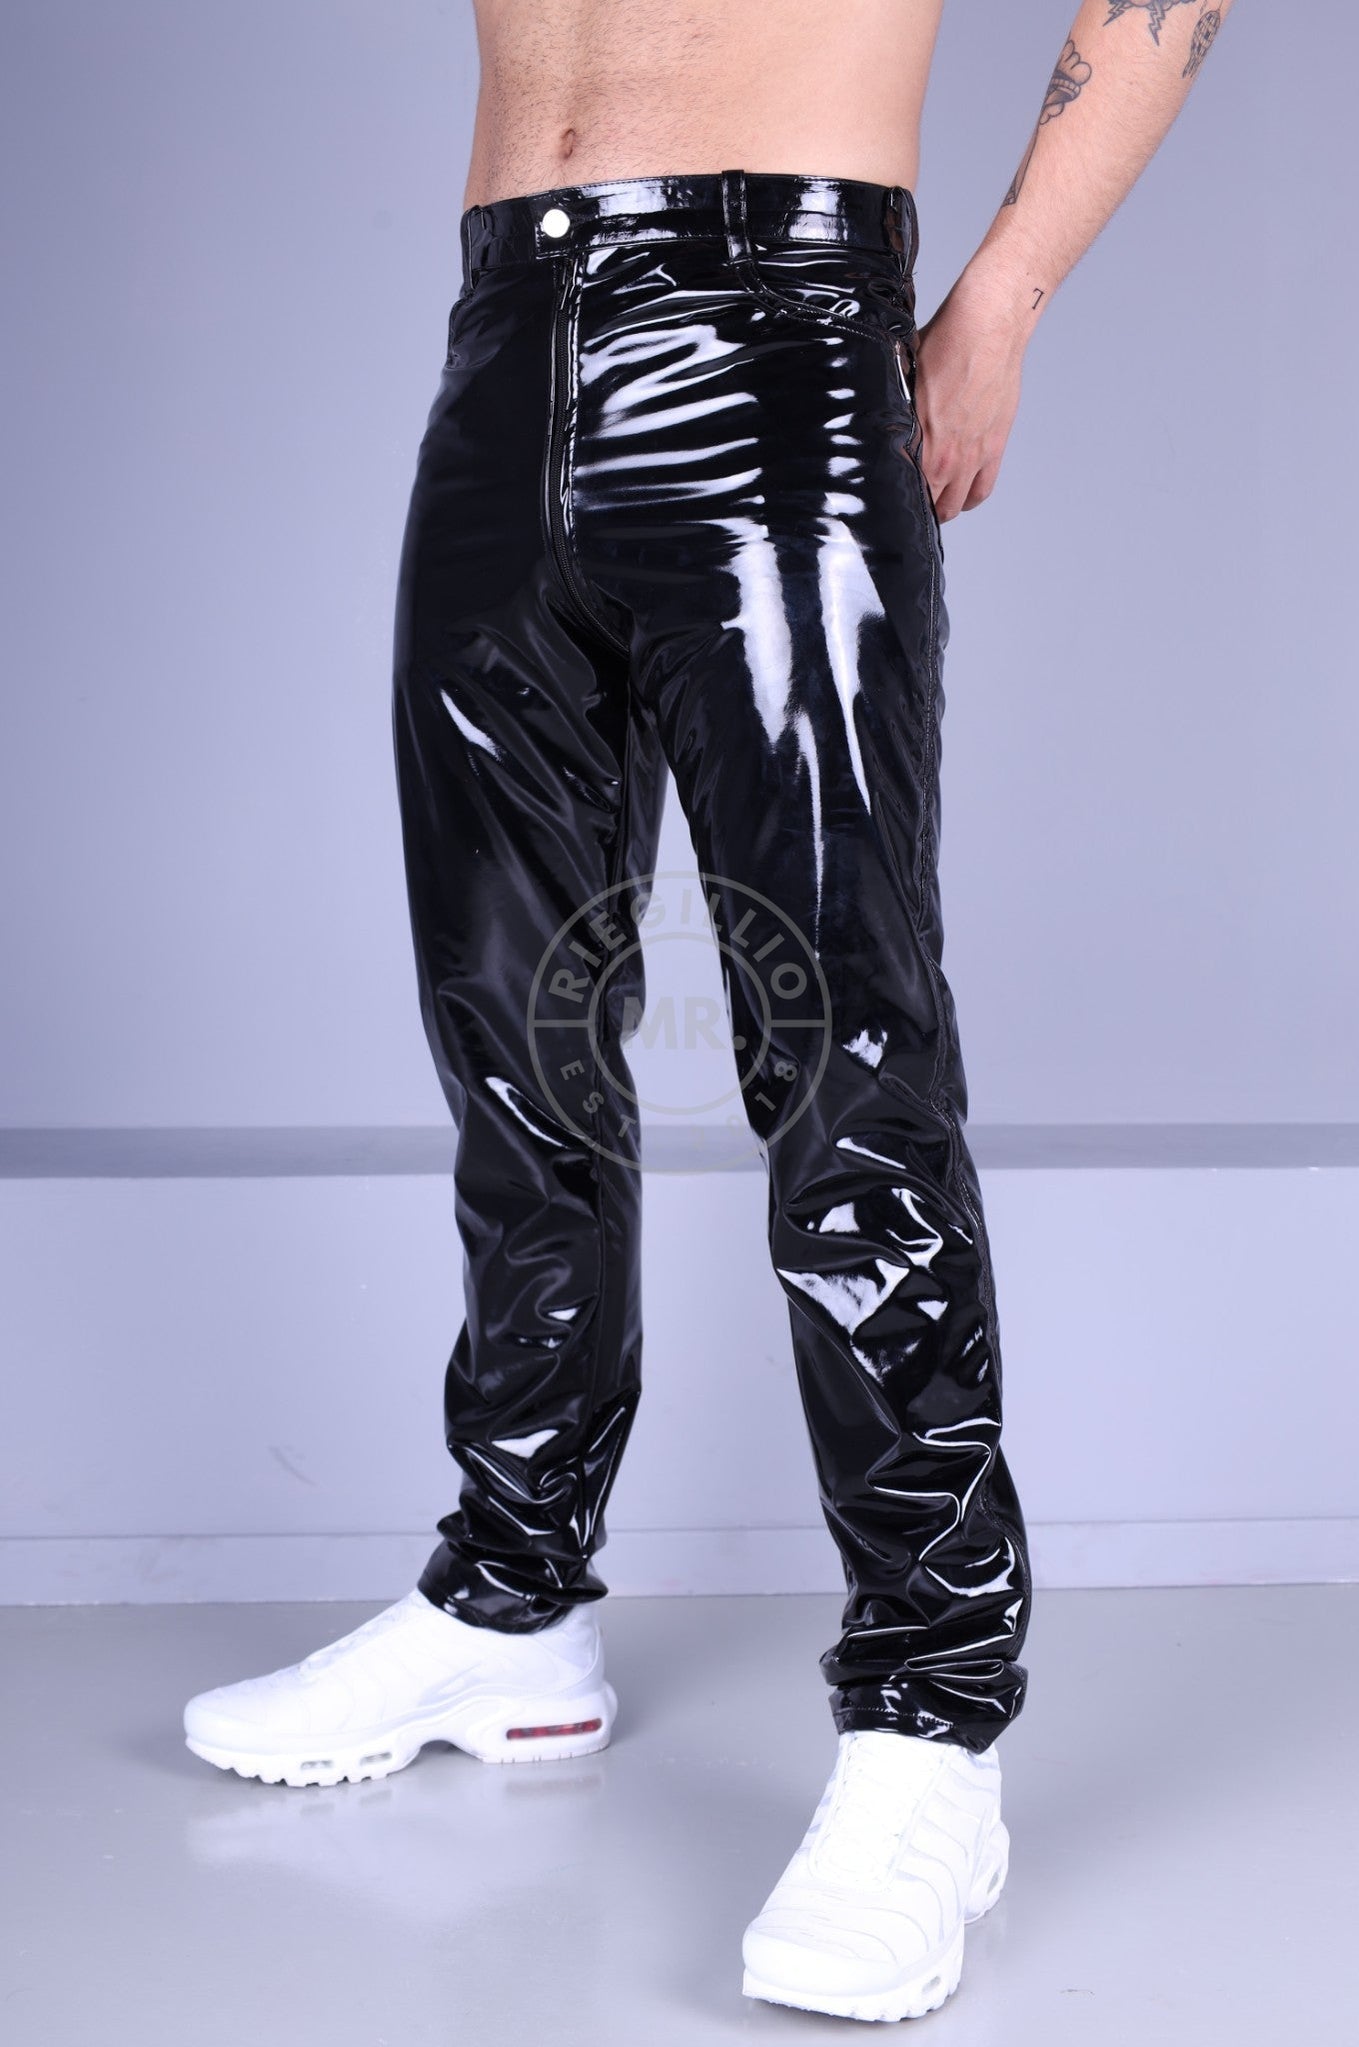 Black PVC Pants - Thru Zip at MR. Riegillio